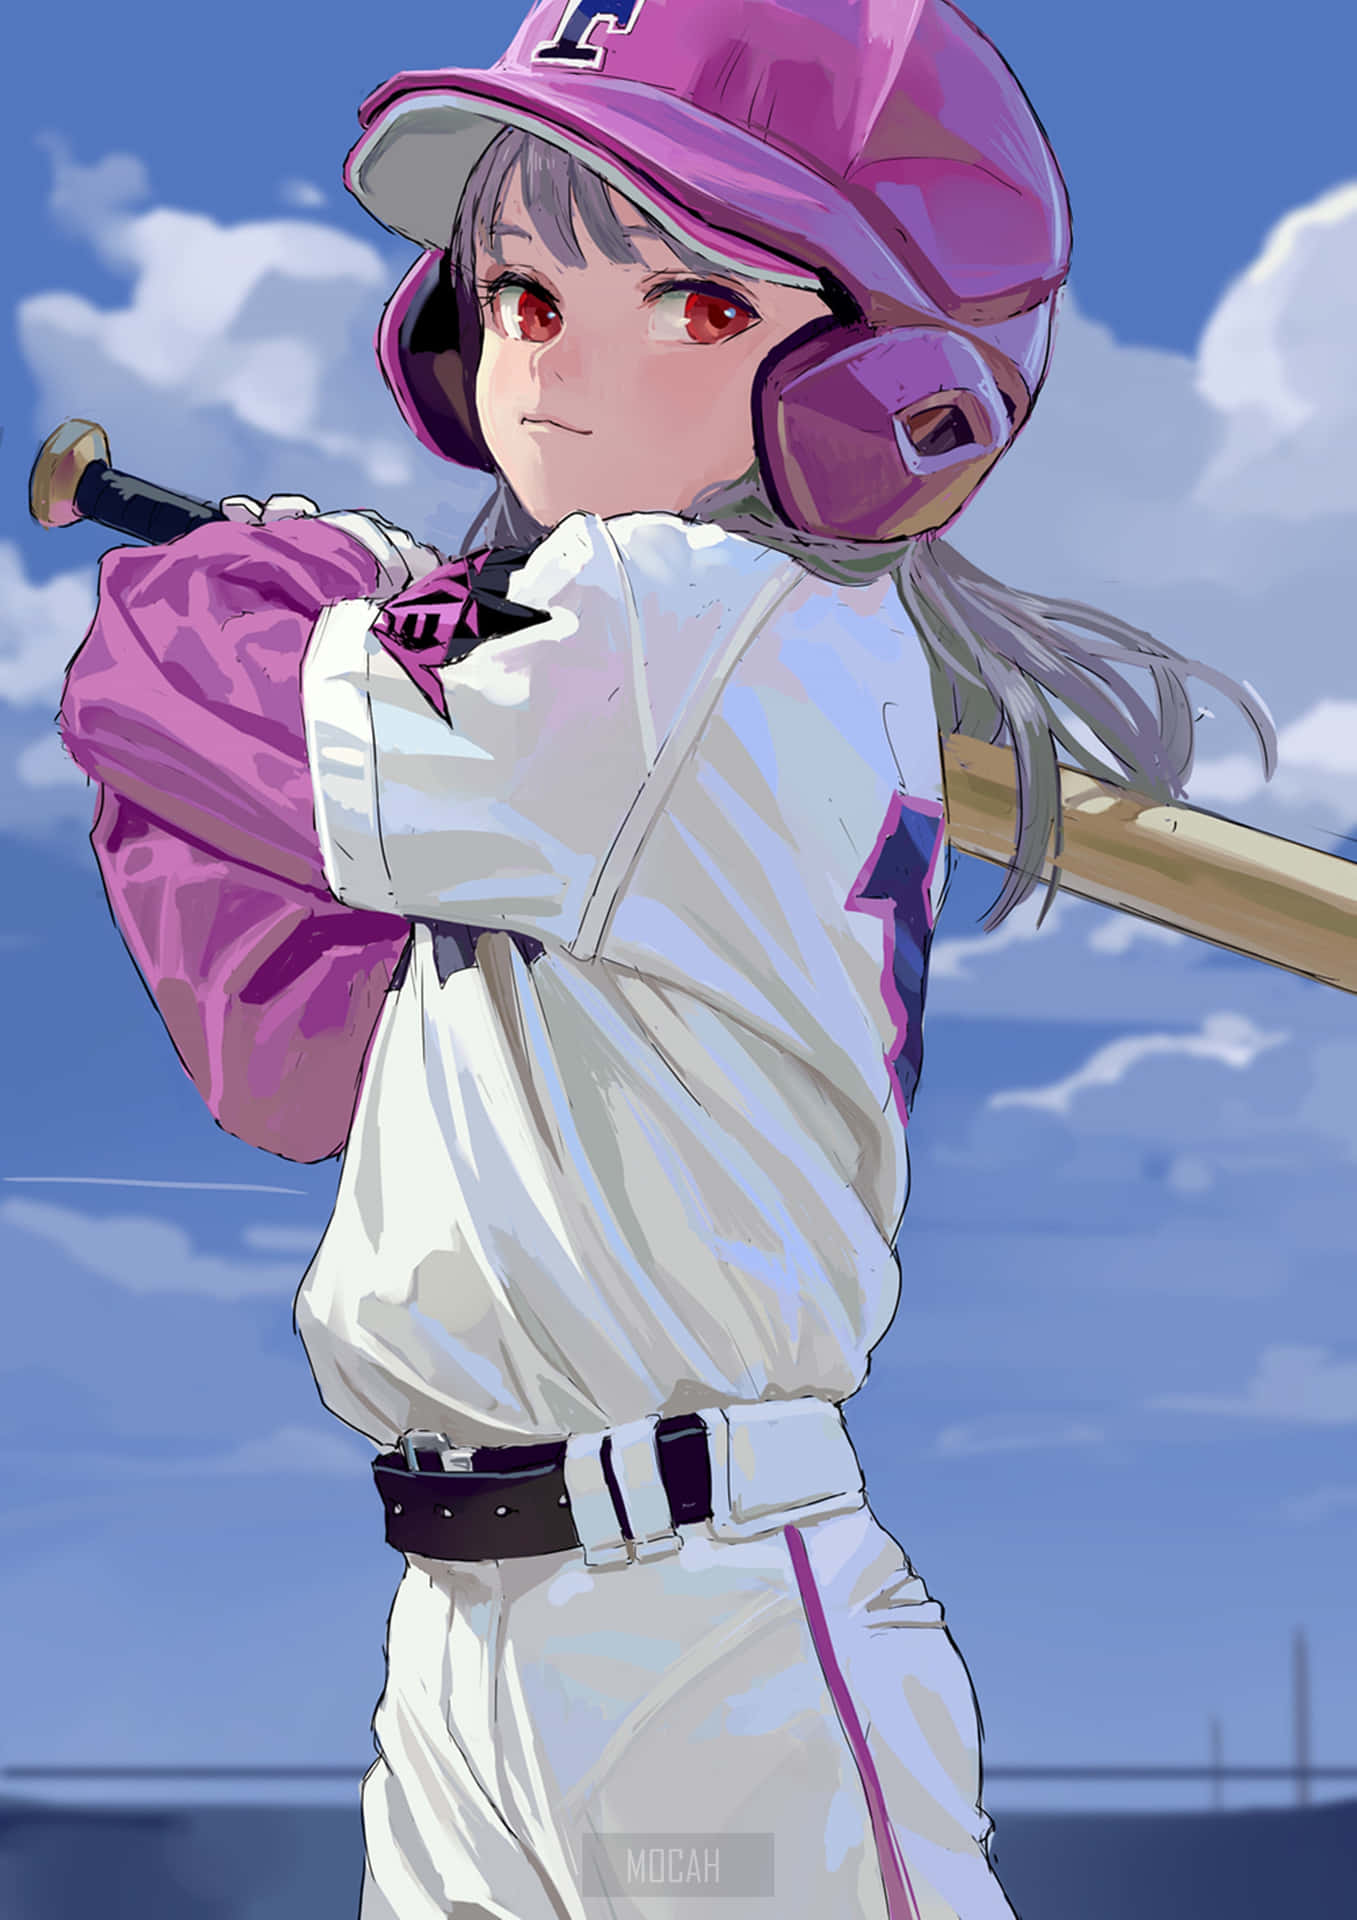 Powerful Baseball Swing in Action Wallpaper